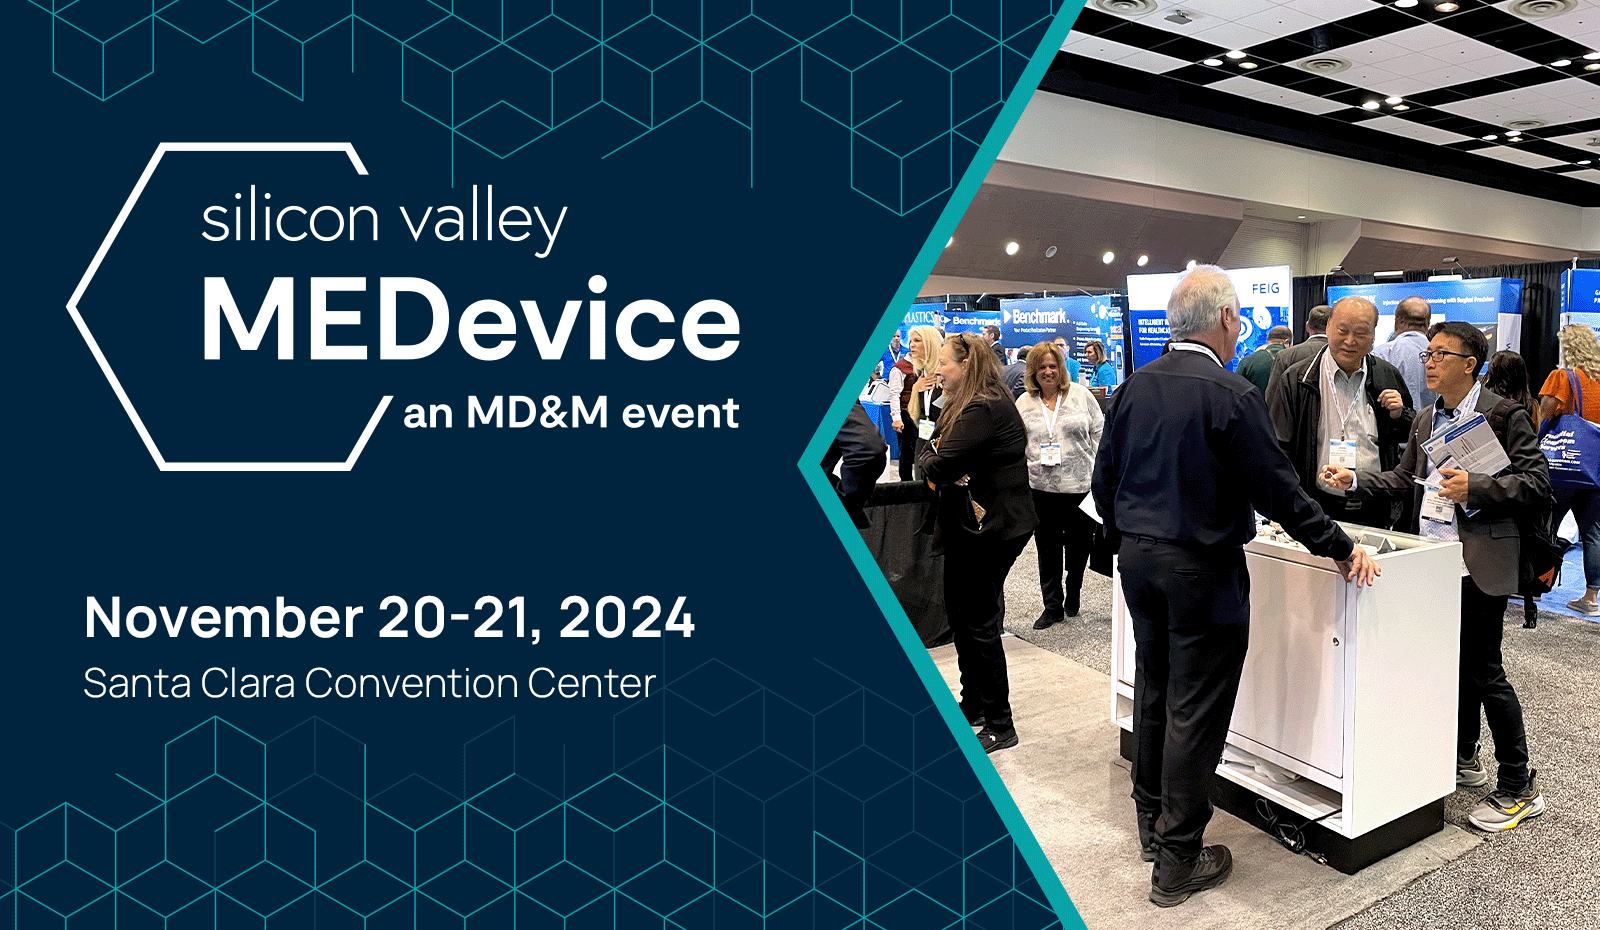 MEDevice Silicon Valley an MD&M event | November 20-21, 2024, Santa Clara Convention Center